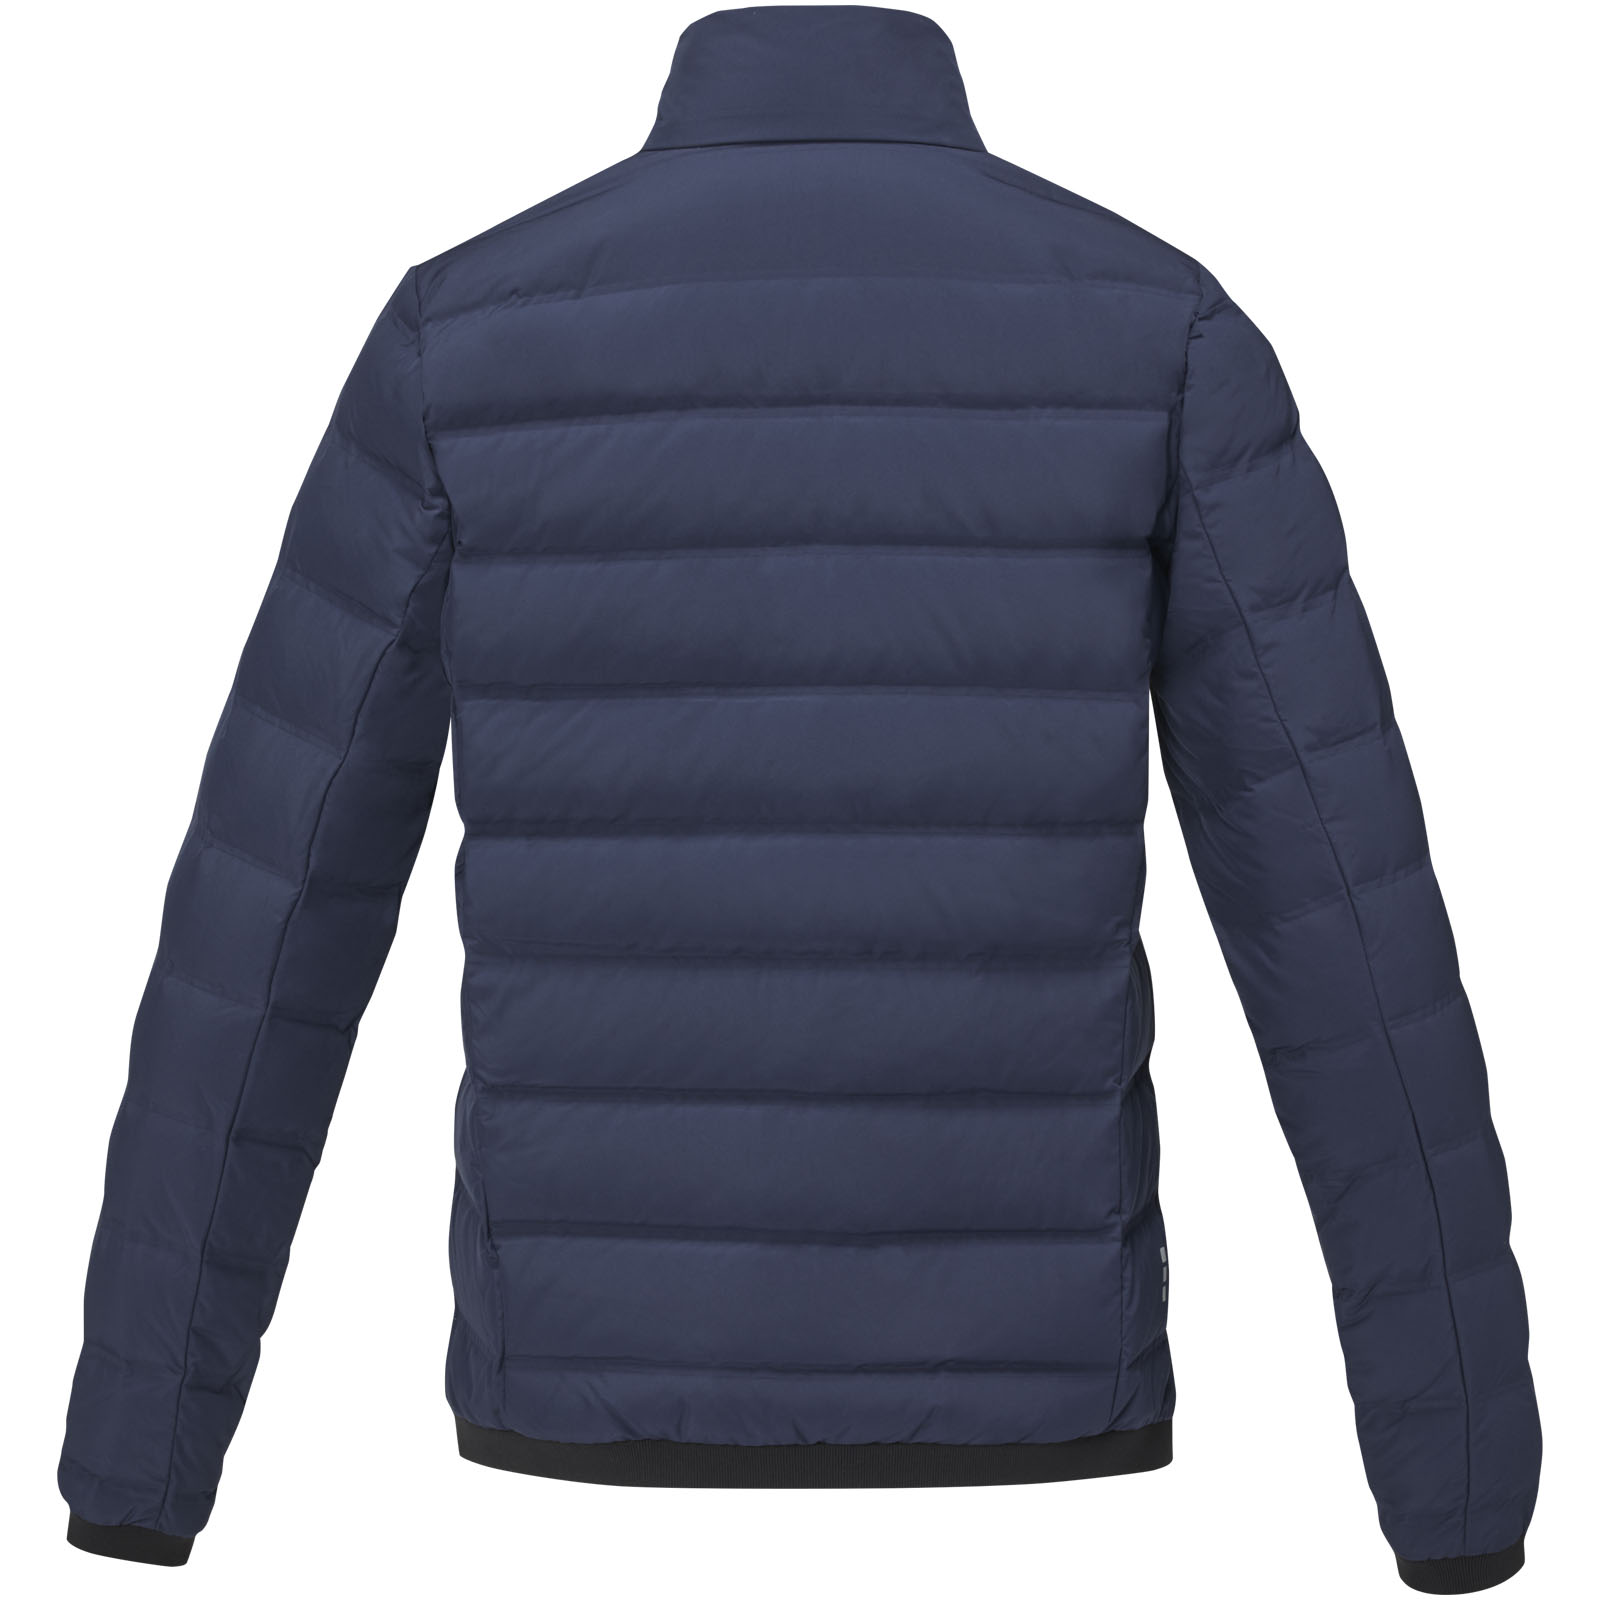 Advertising Jackets - Macin women's insulated down jacket - 2